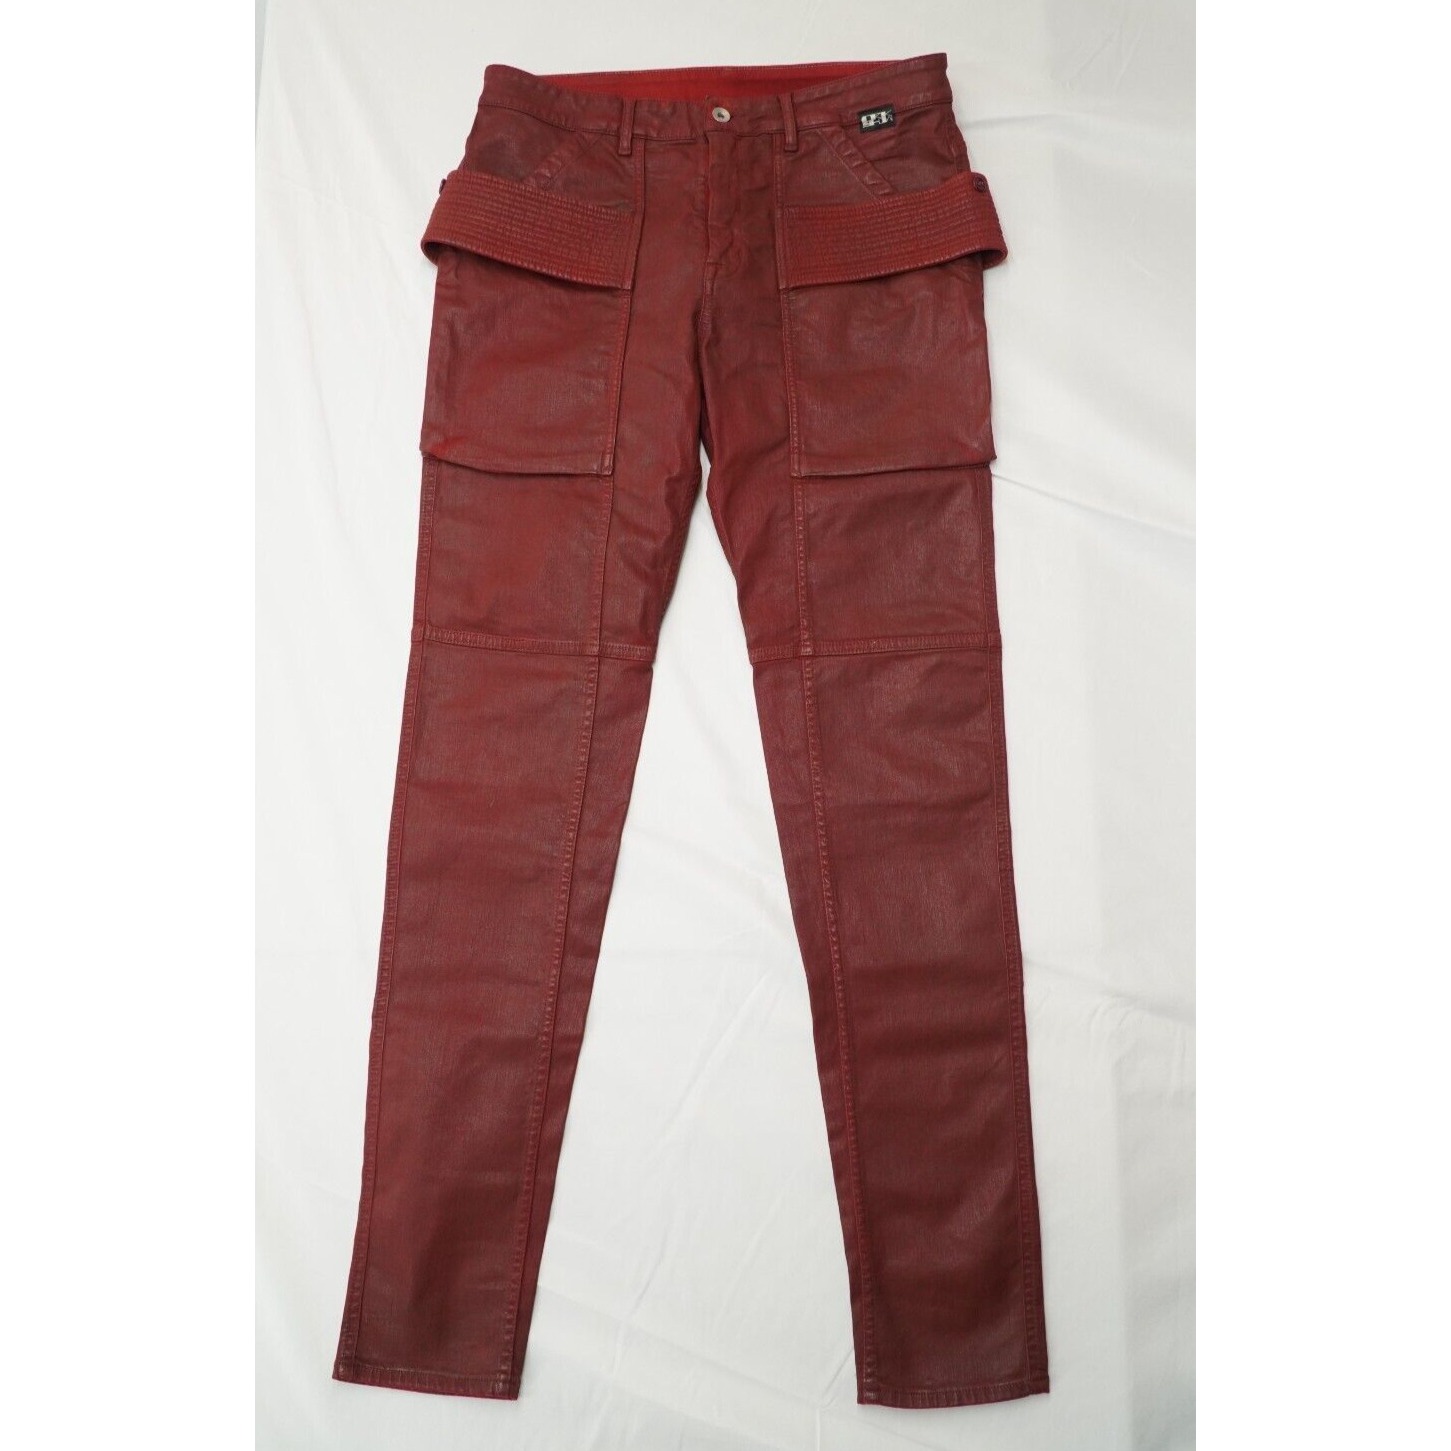 SS21 Easy Creatch Cut 33 Wax Trouser Cargo Pants Dark Cherry - 3